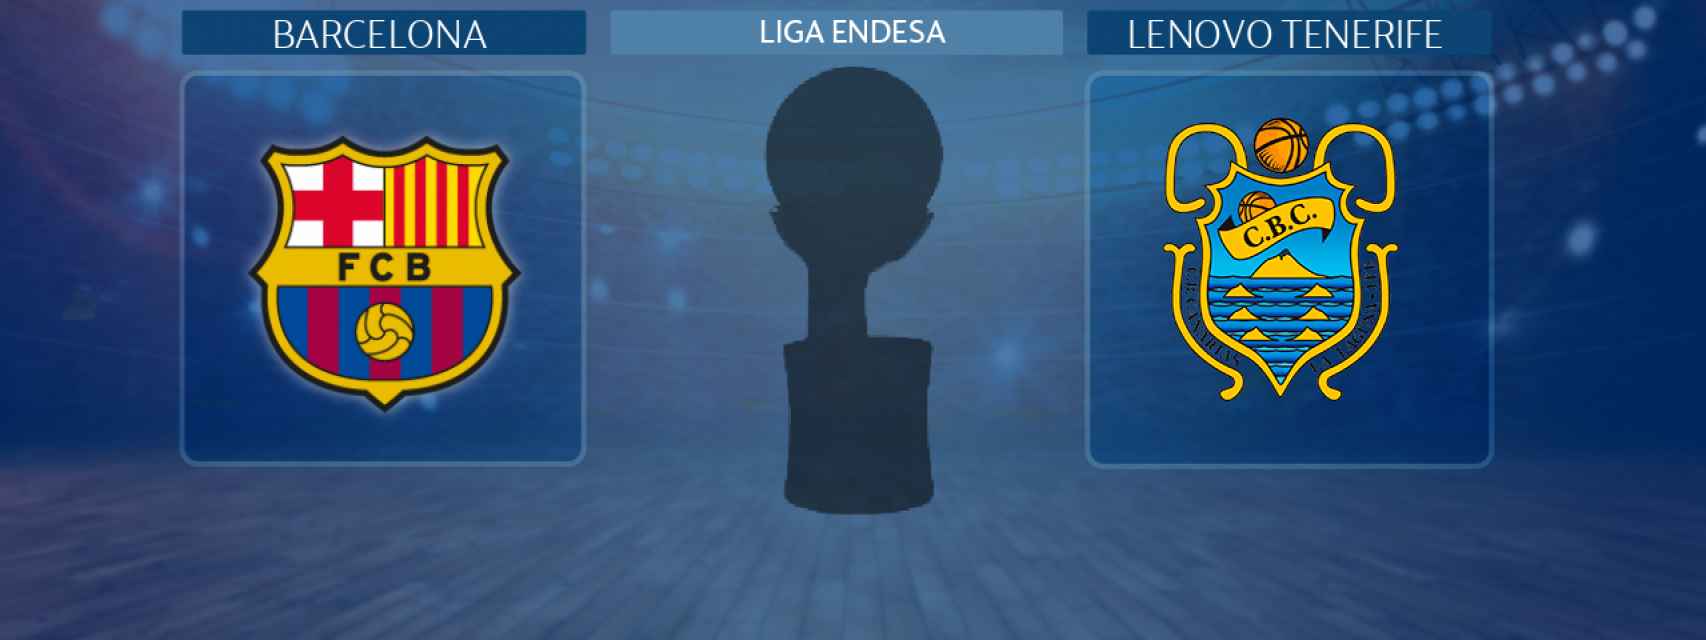 Barcelona - Lenovo Tenerife, semifinal de la Liga Endesa